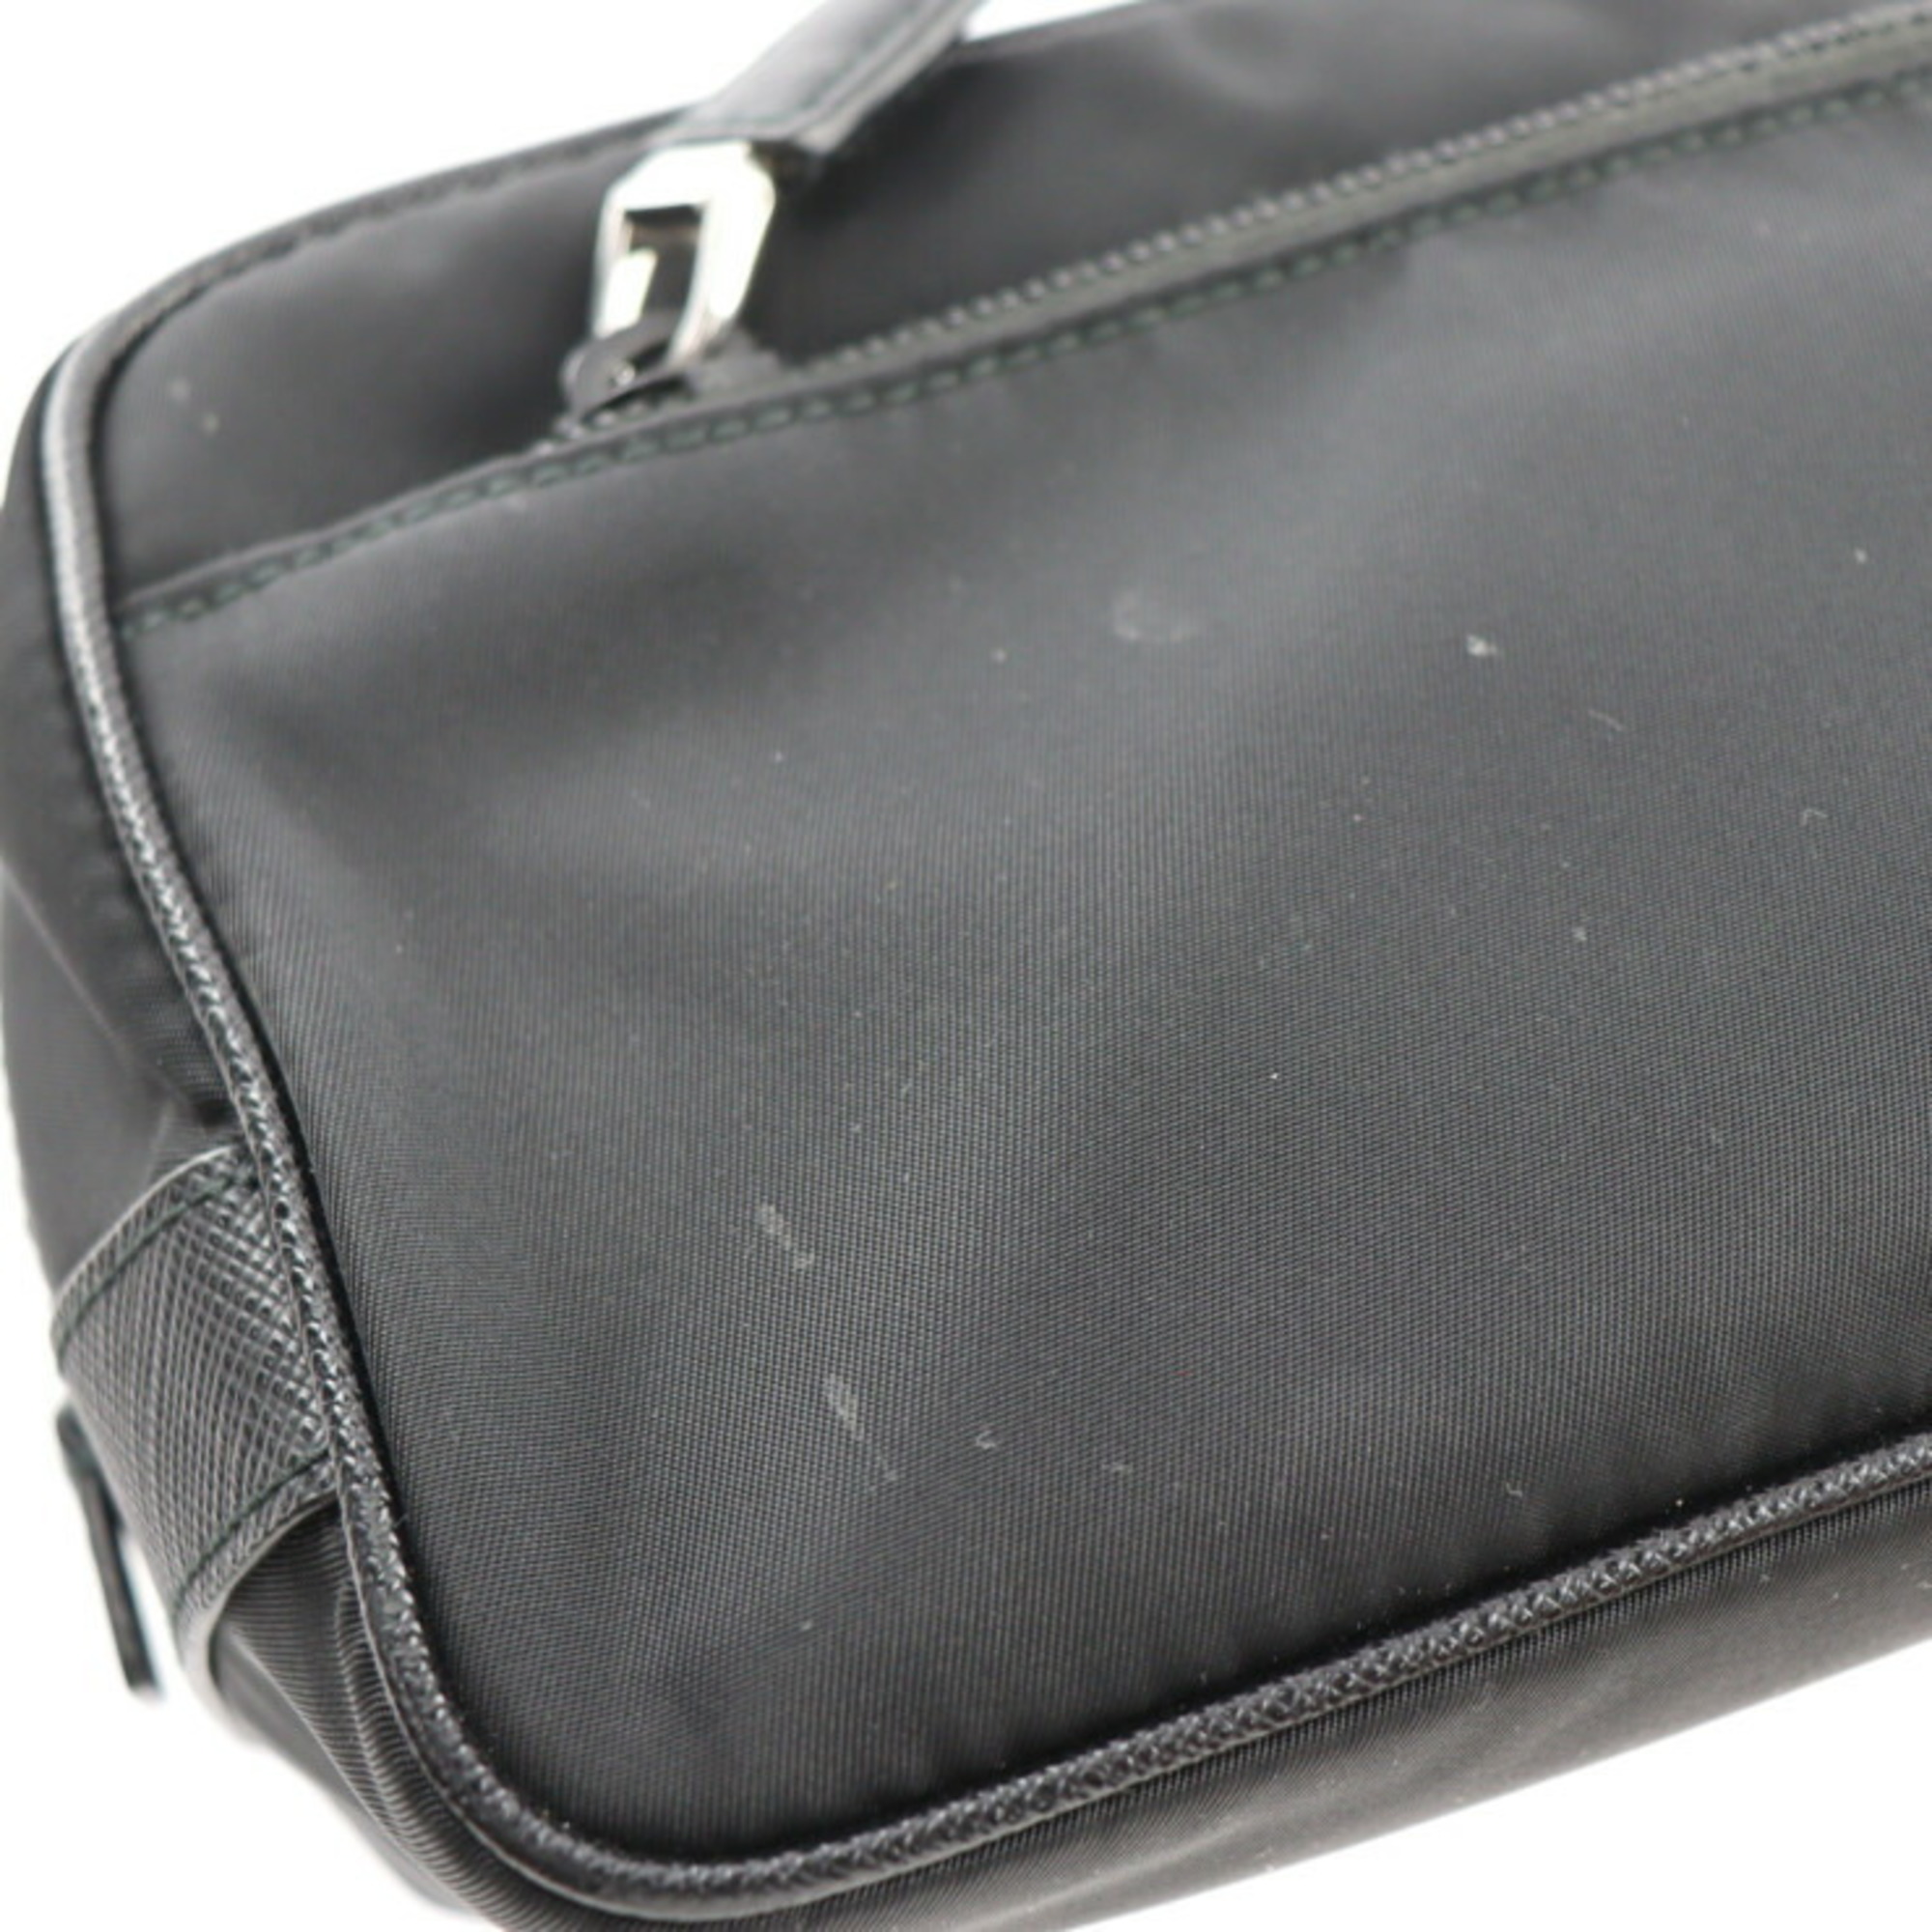 PRADA Prada second bag 2NA819 nylon leather black silver hardware clutch handbag triangle logo